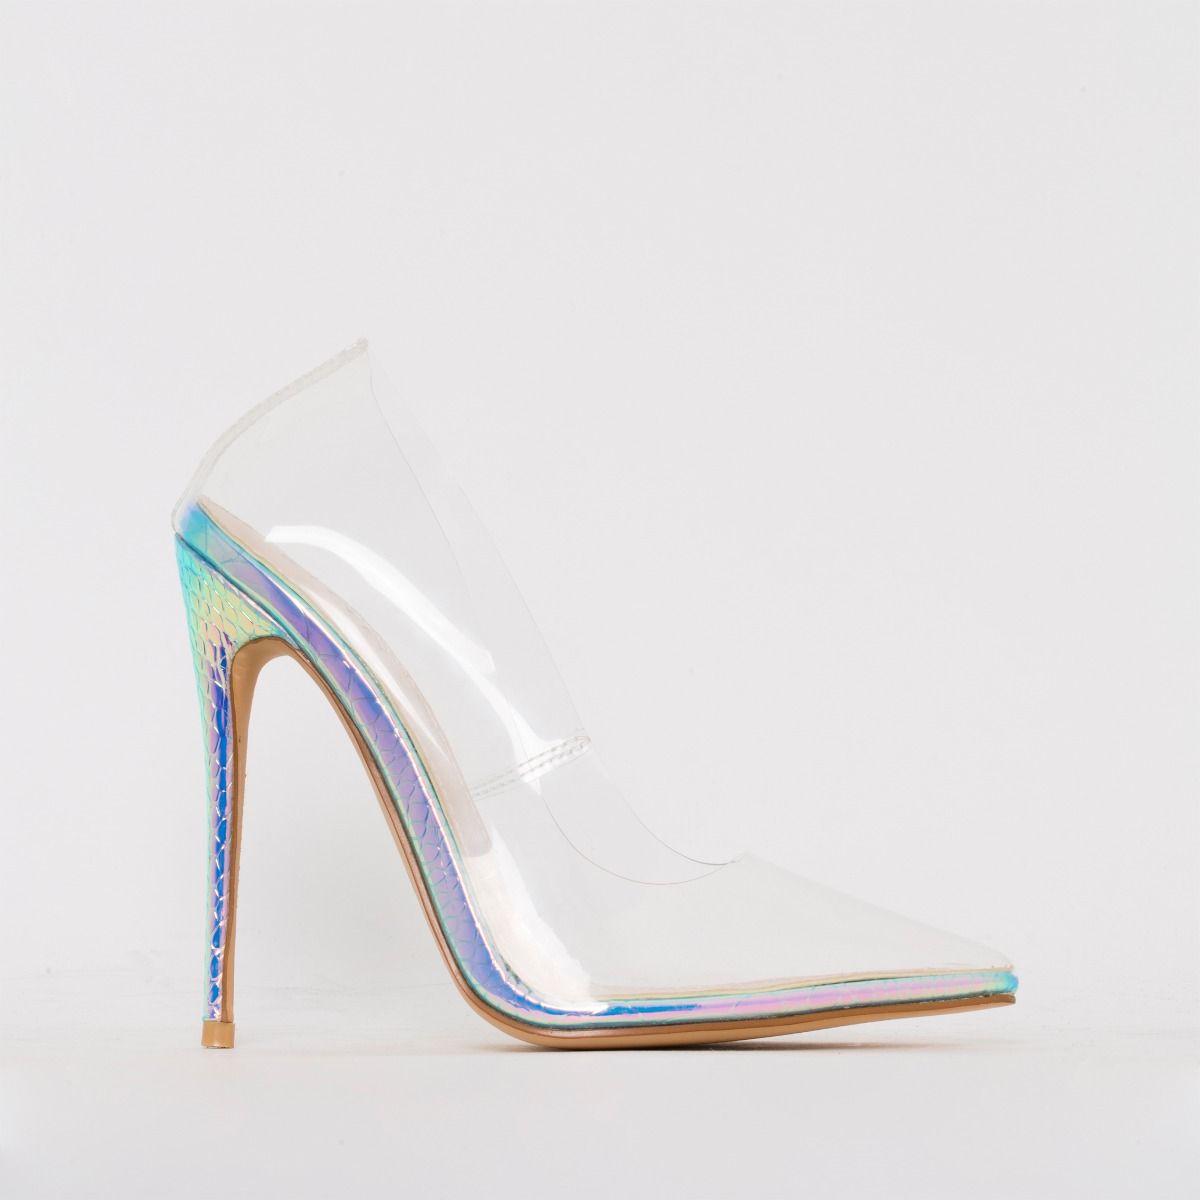 rainbow clear shoes